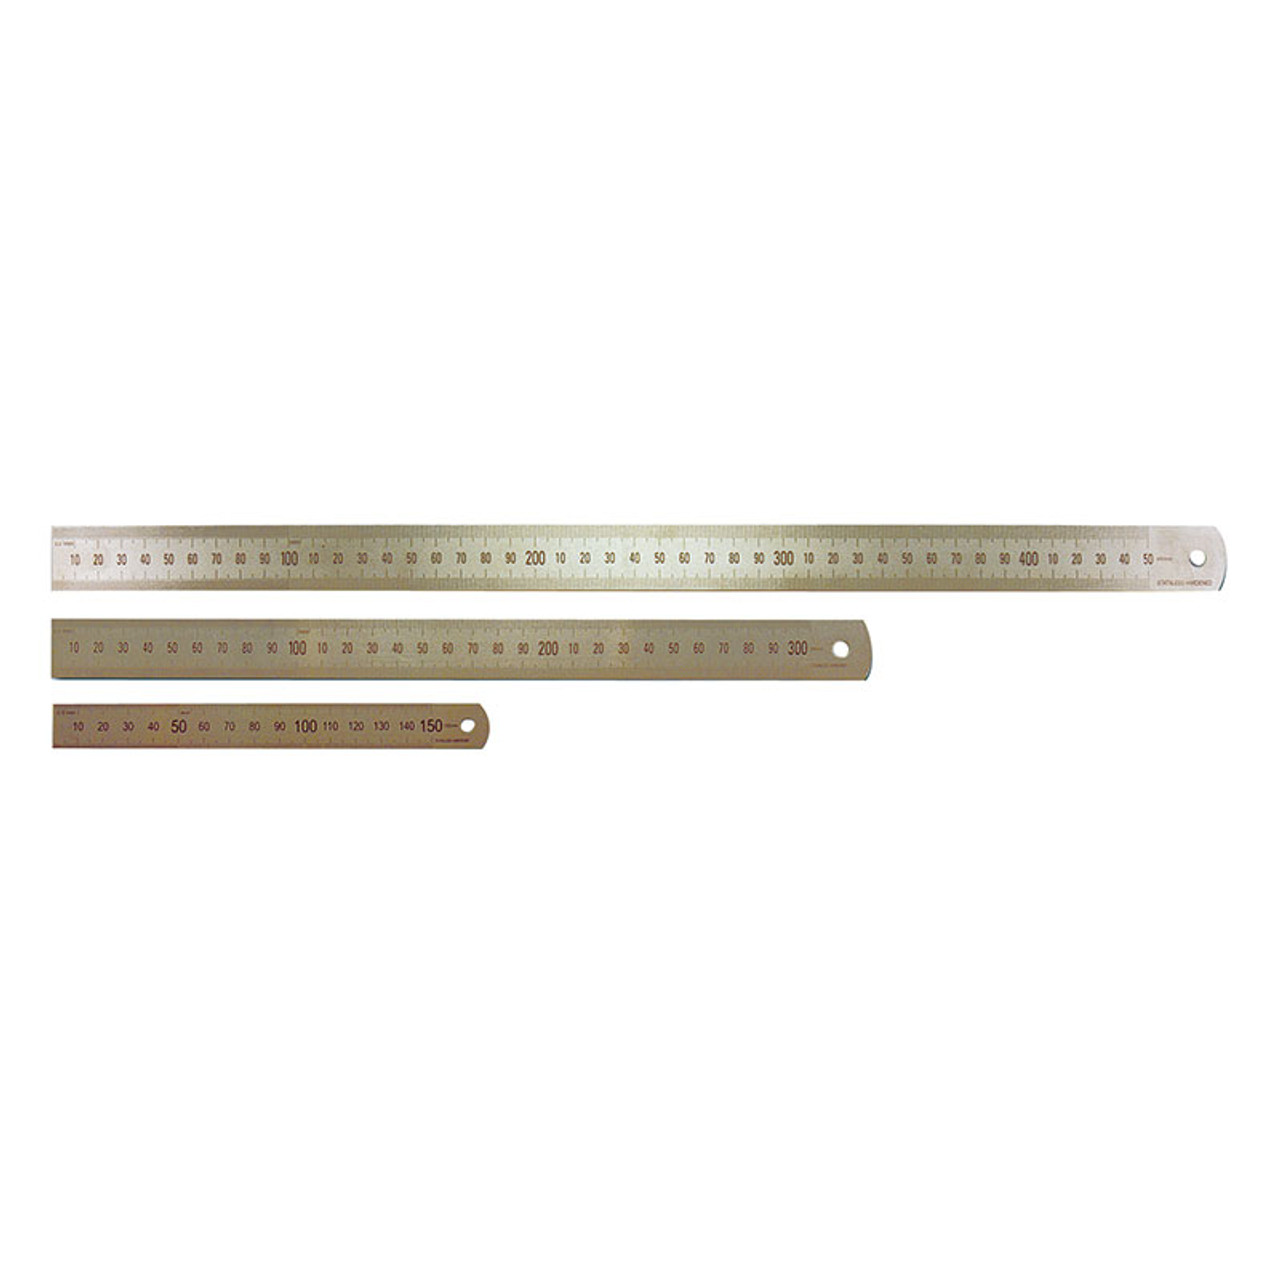 300Mm/12In Stainless Steel Ruler - Metric/Imperial